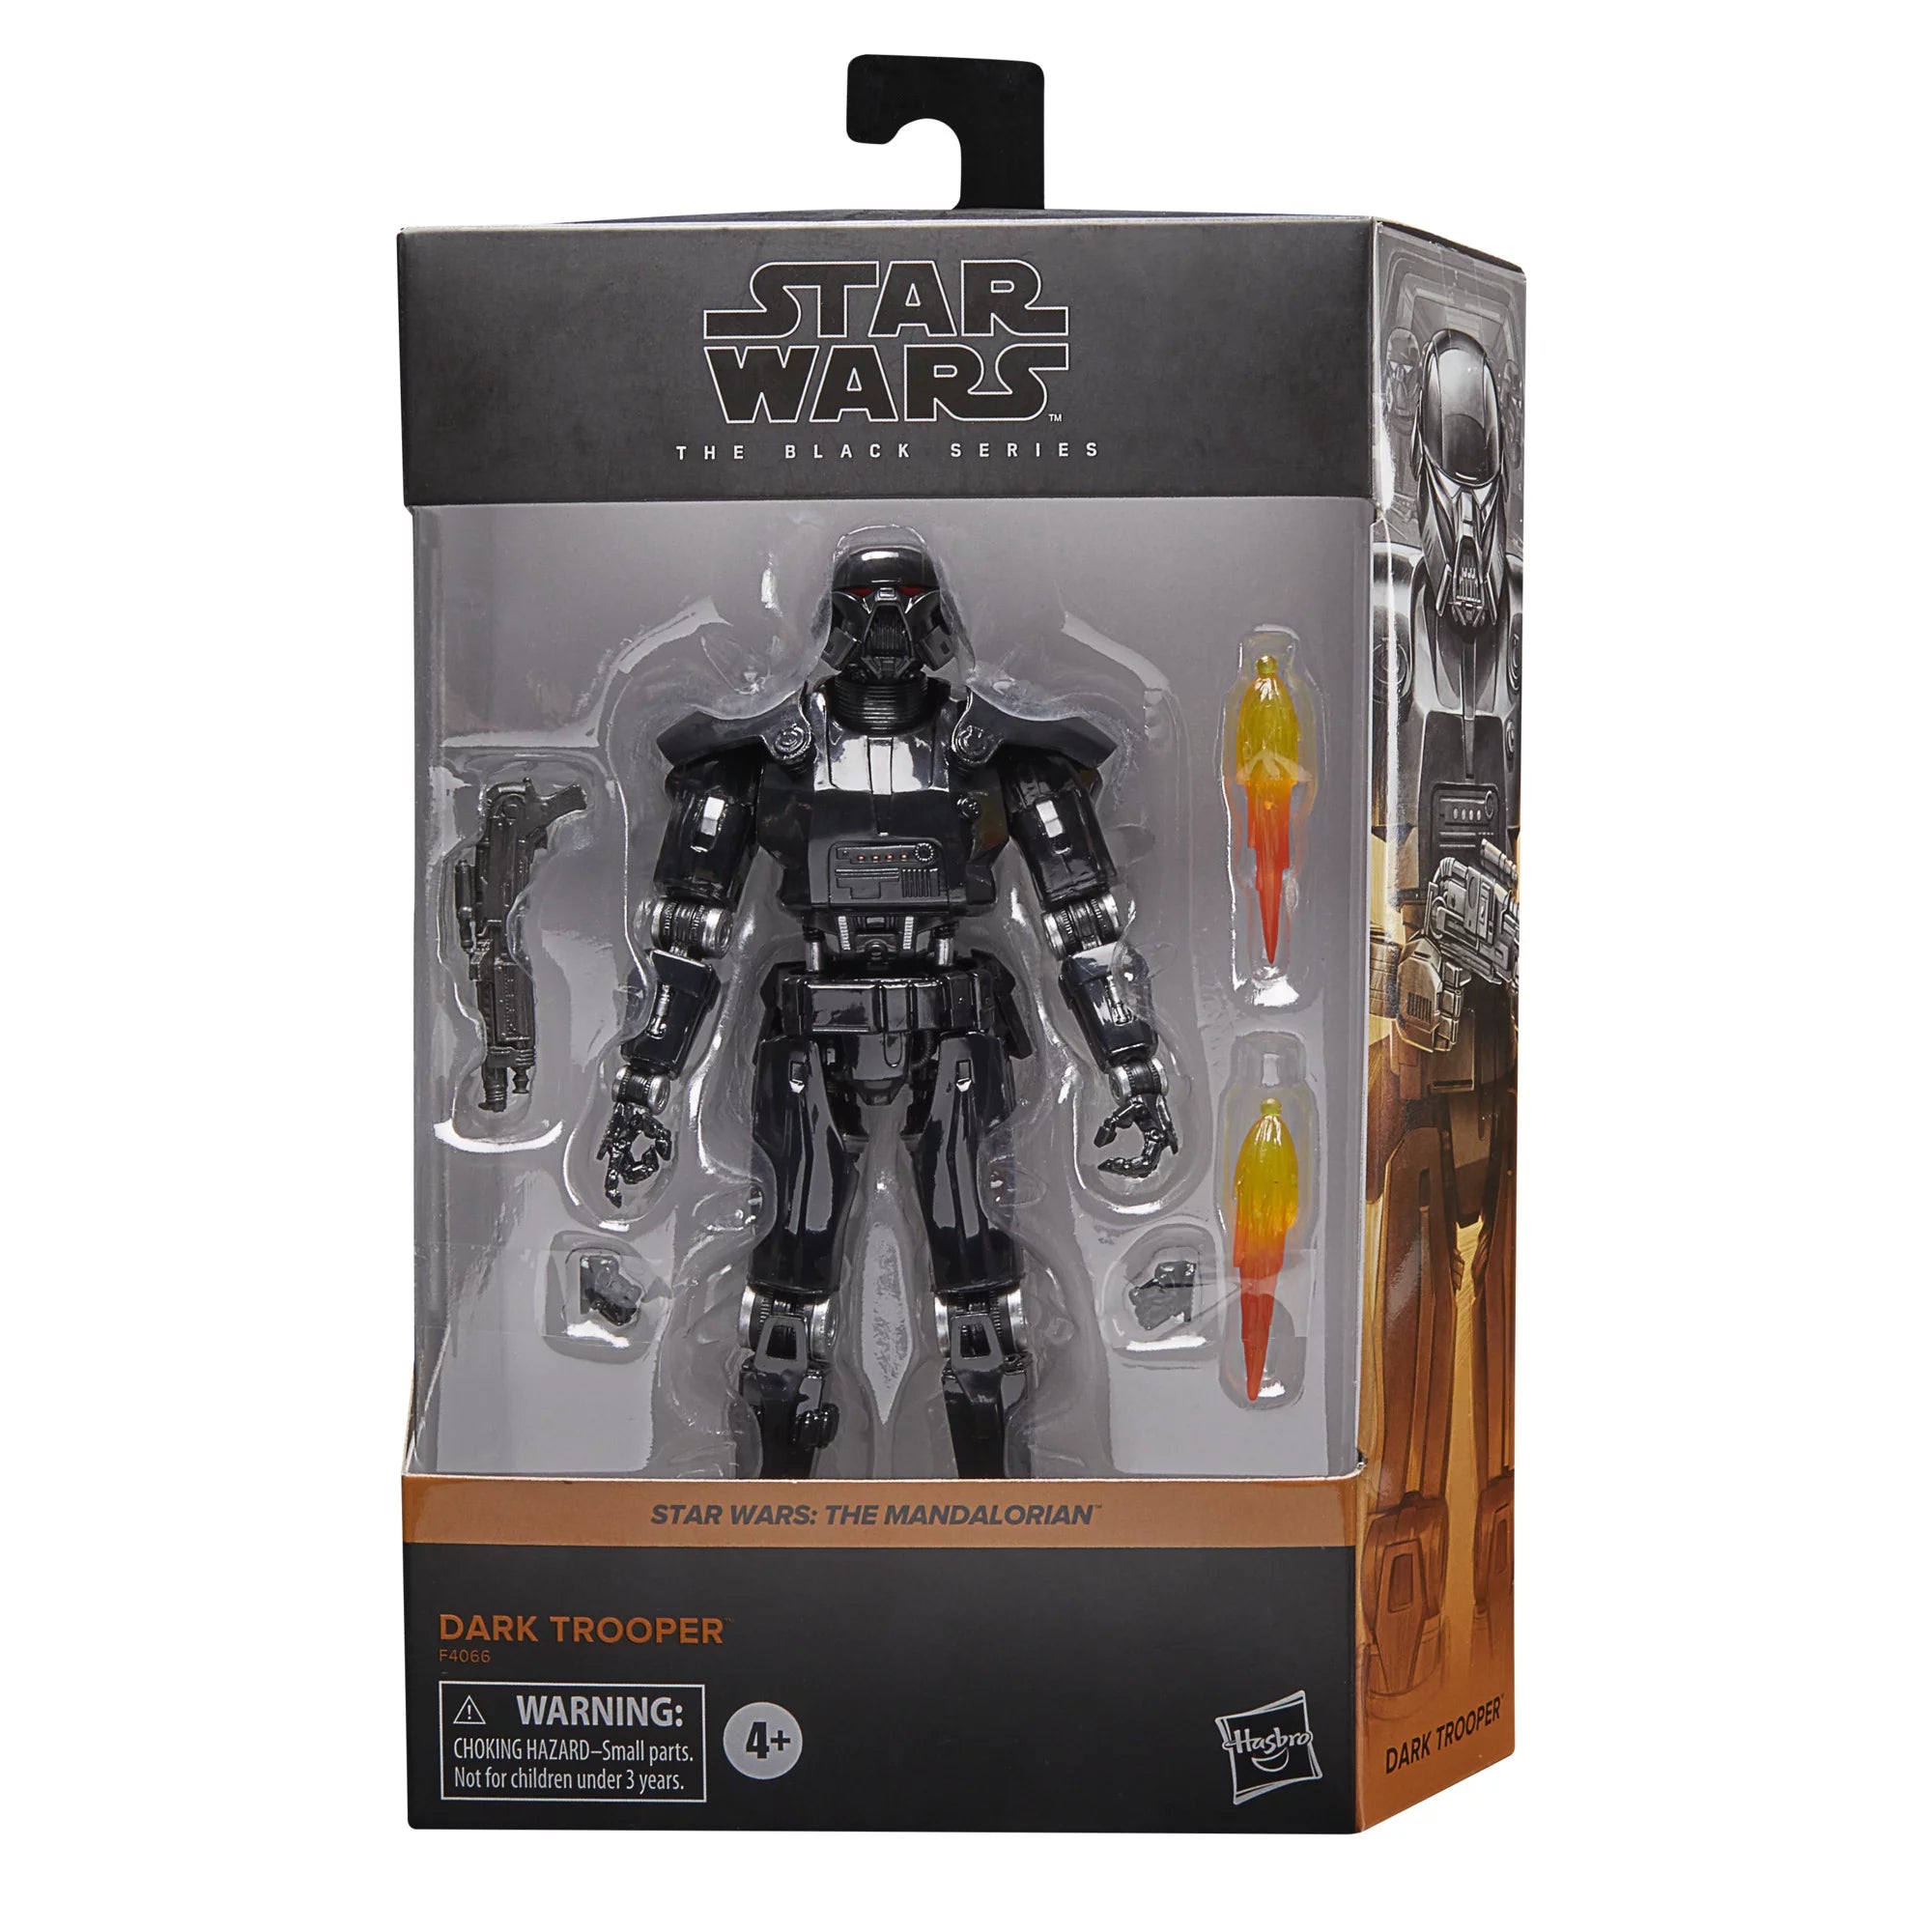 Star Wars: The Black Series 6" Deluxe Dark Trooper By Hashbro